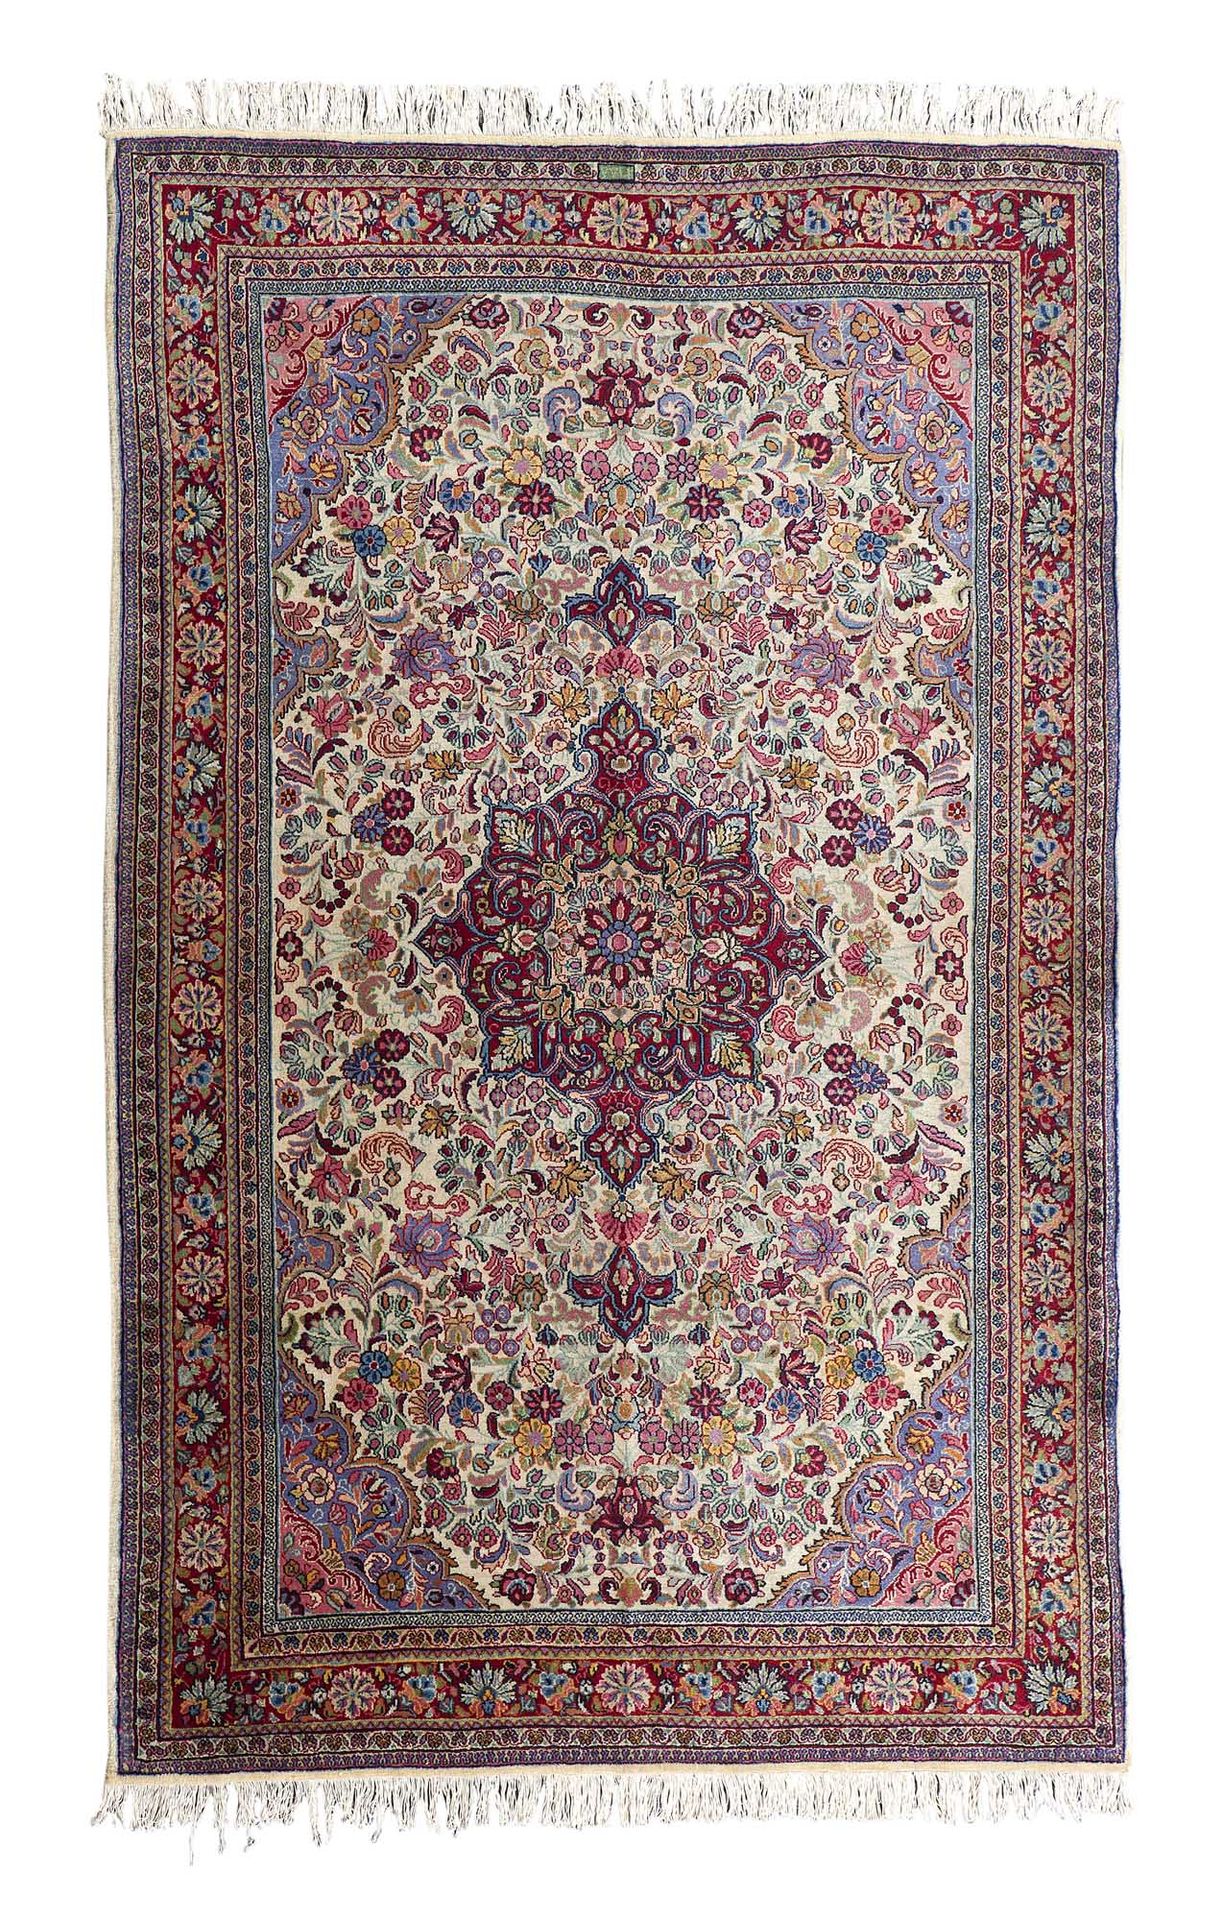 Null SAROUK carpet, (Persia), early 20th century

Dimensions : 195 x 129cm

Tech&hellip;